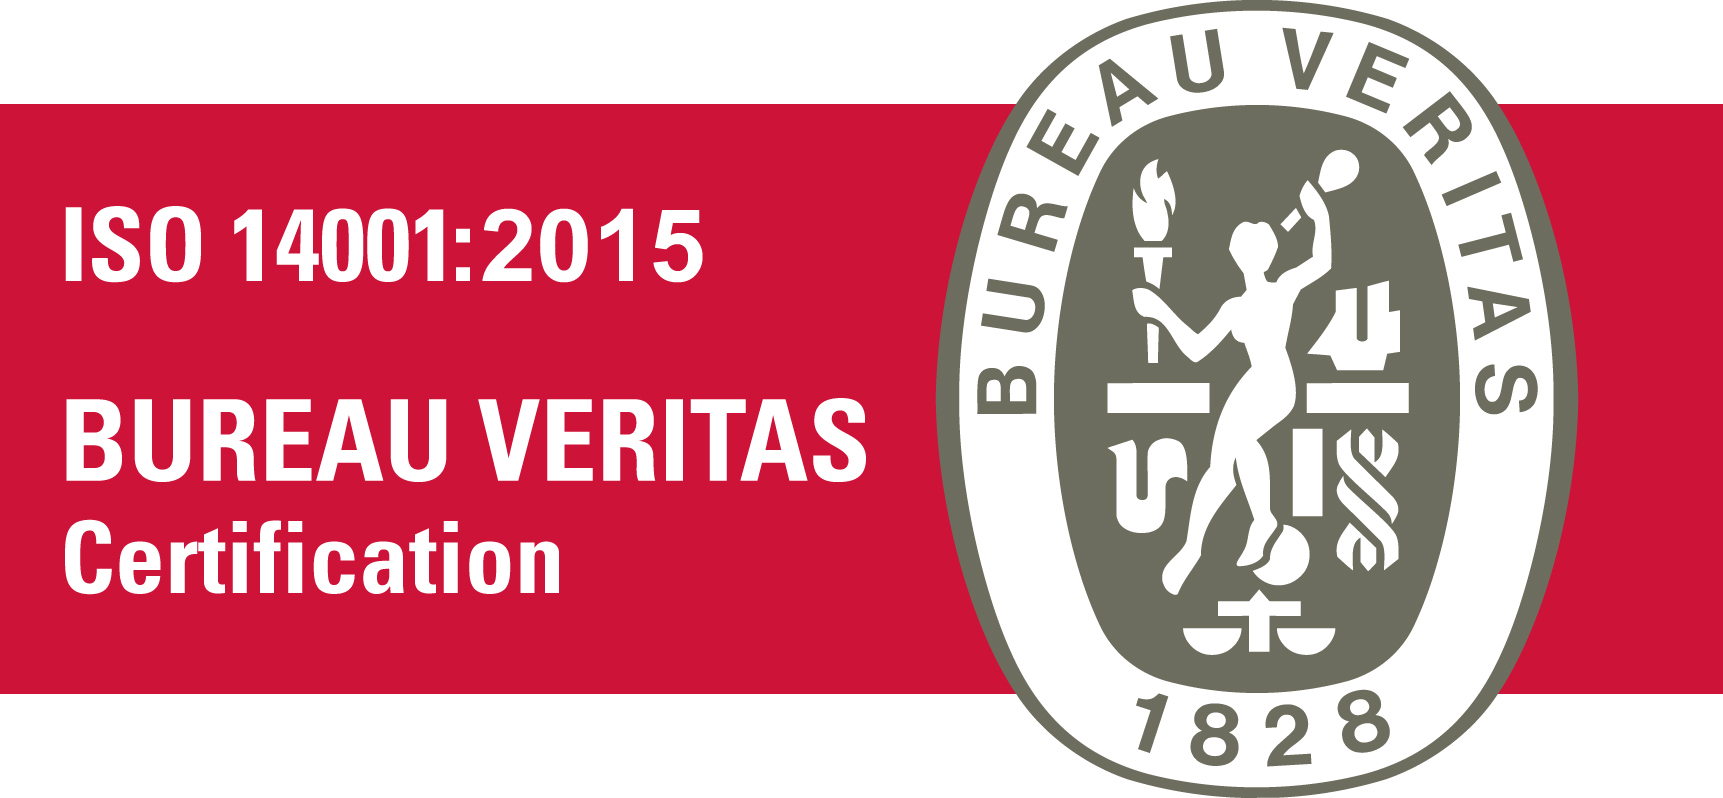 ISO 14001 Bureau Veritas logo